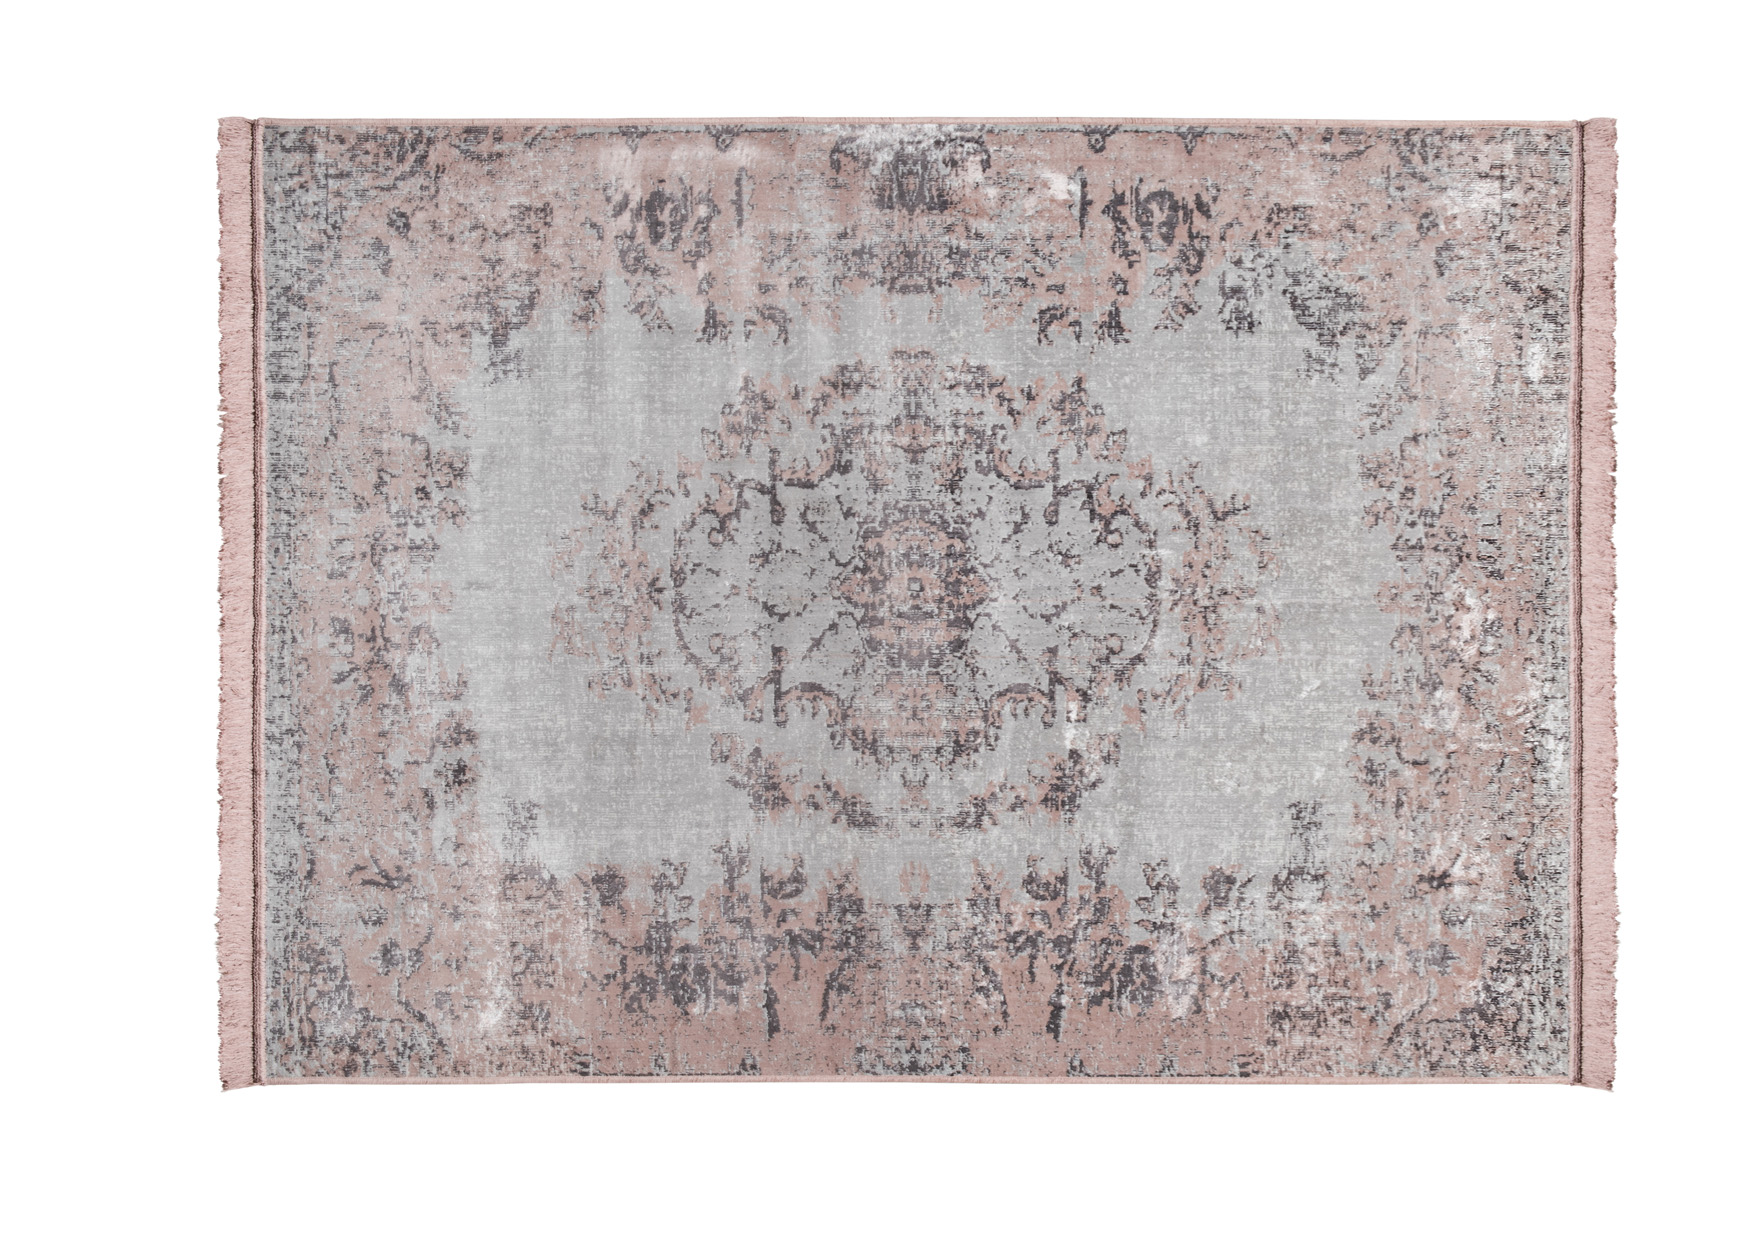 Vintage-Teppich VAN DYCK, 200 x 300 cm | altrosa | traditionelle Ornamente | Used-Look